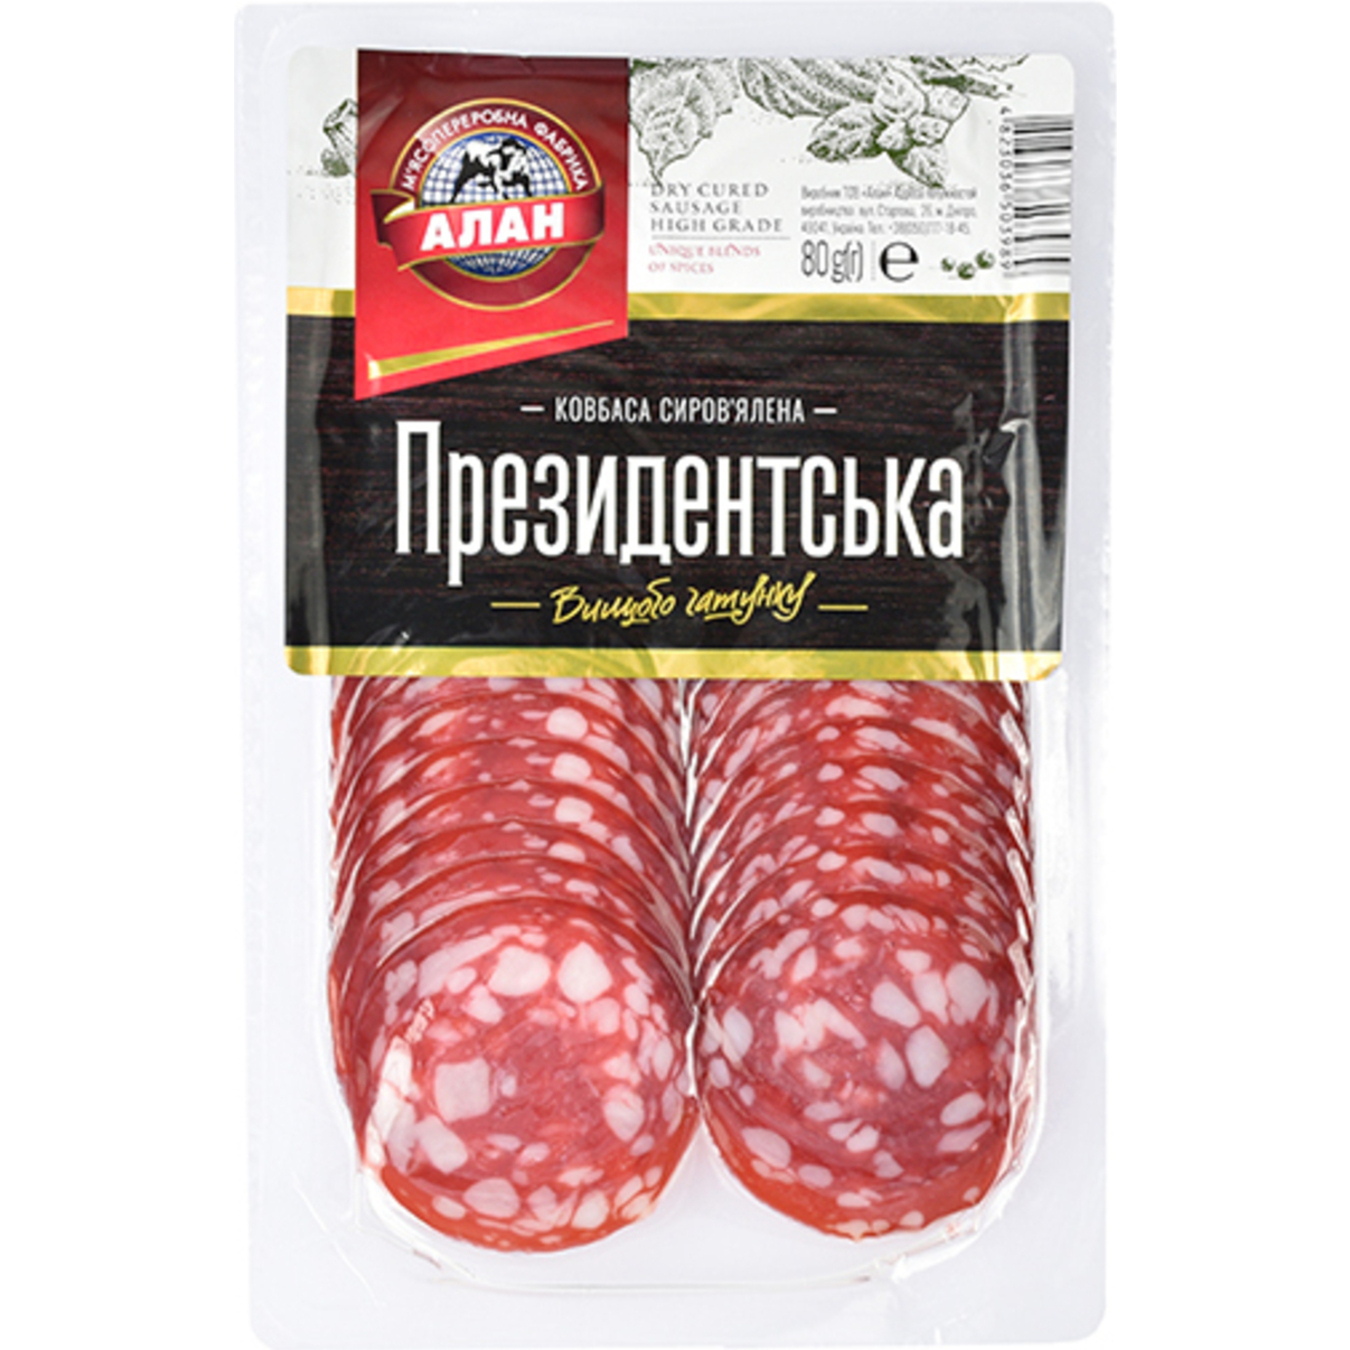 Alan Prezydentska Sliced Dry Cured Sausage High Grade 80g